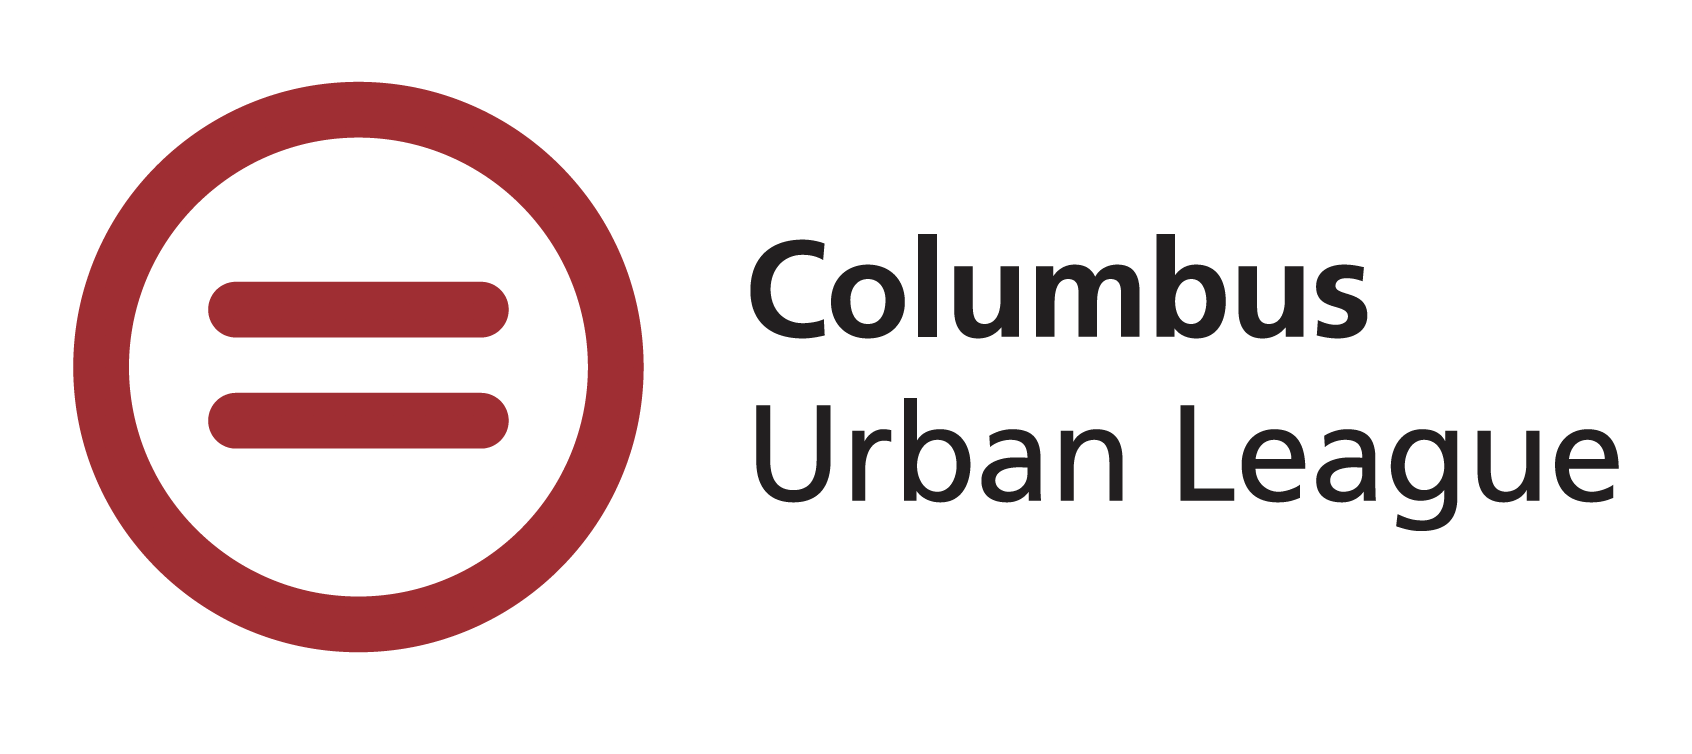 Columbus Urban League